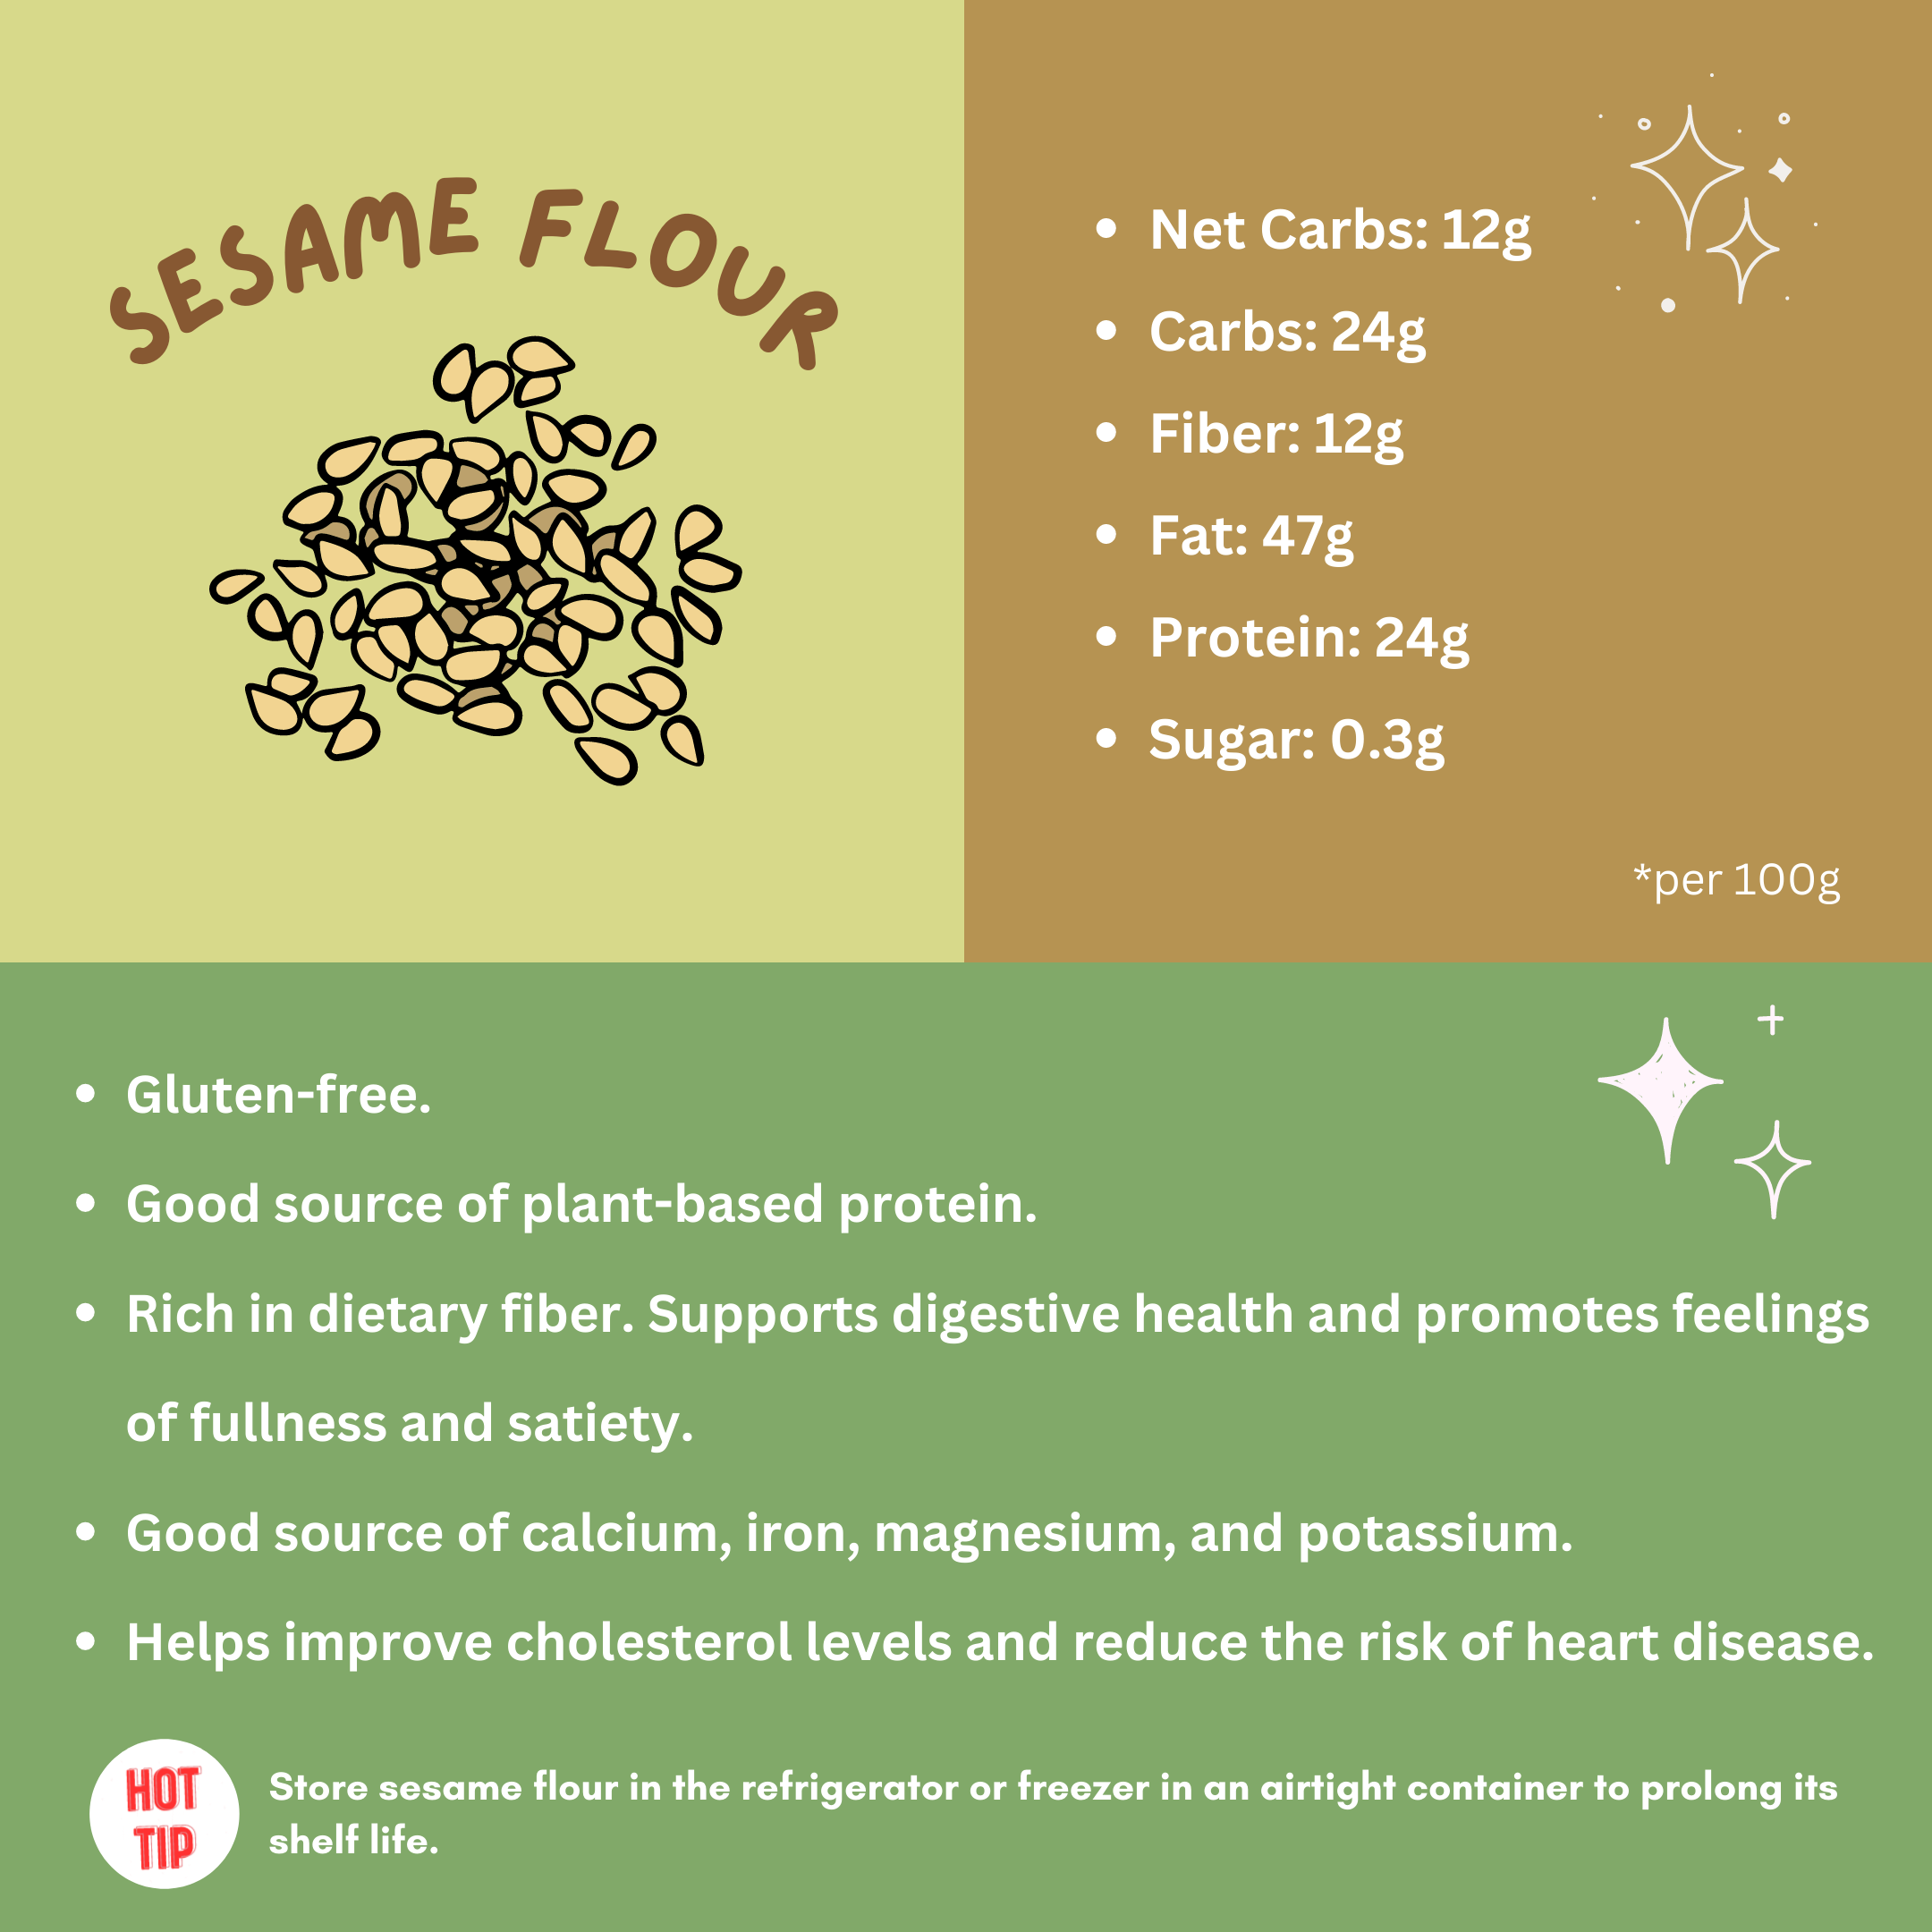 sesame seed flour infographic